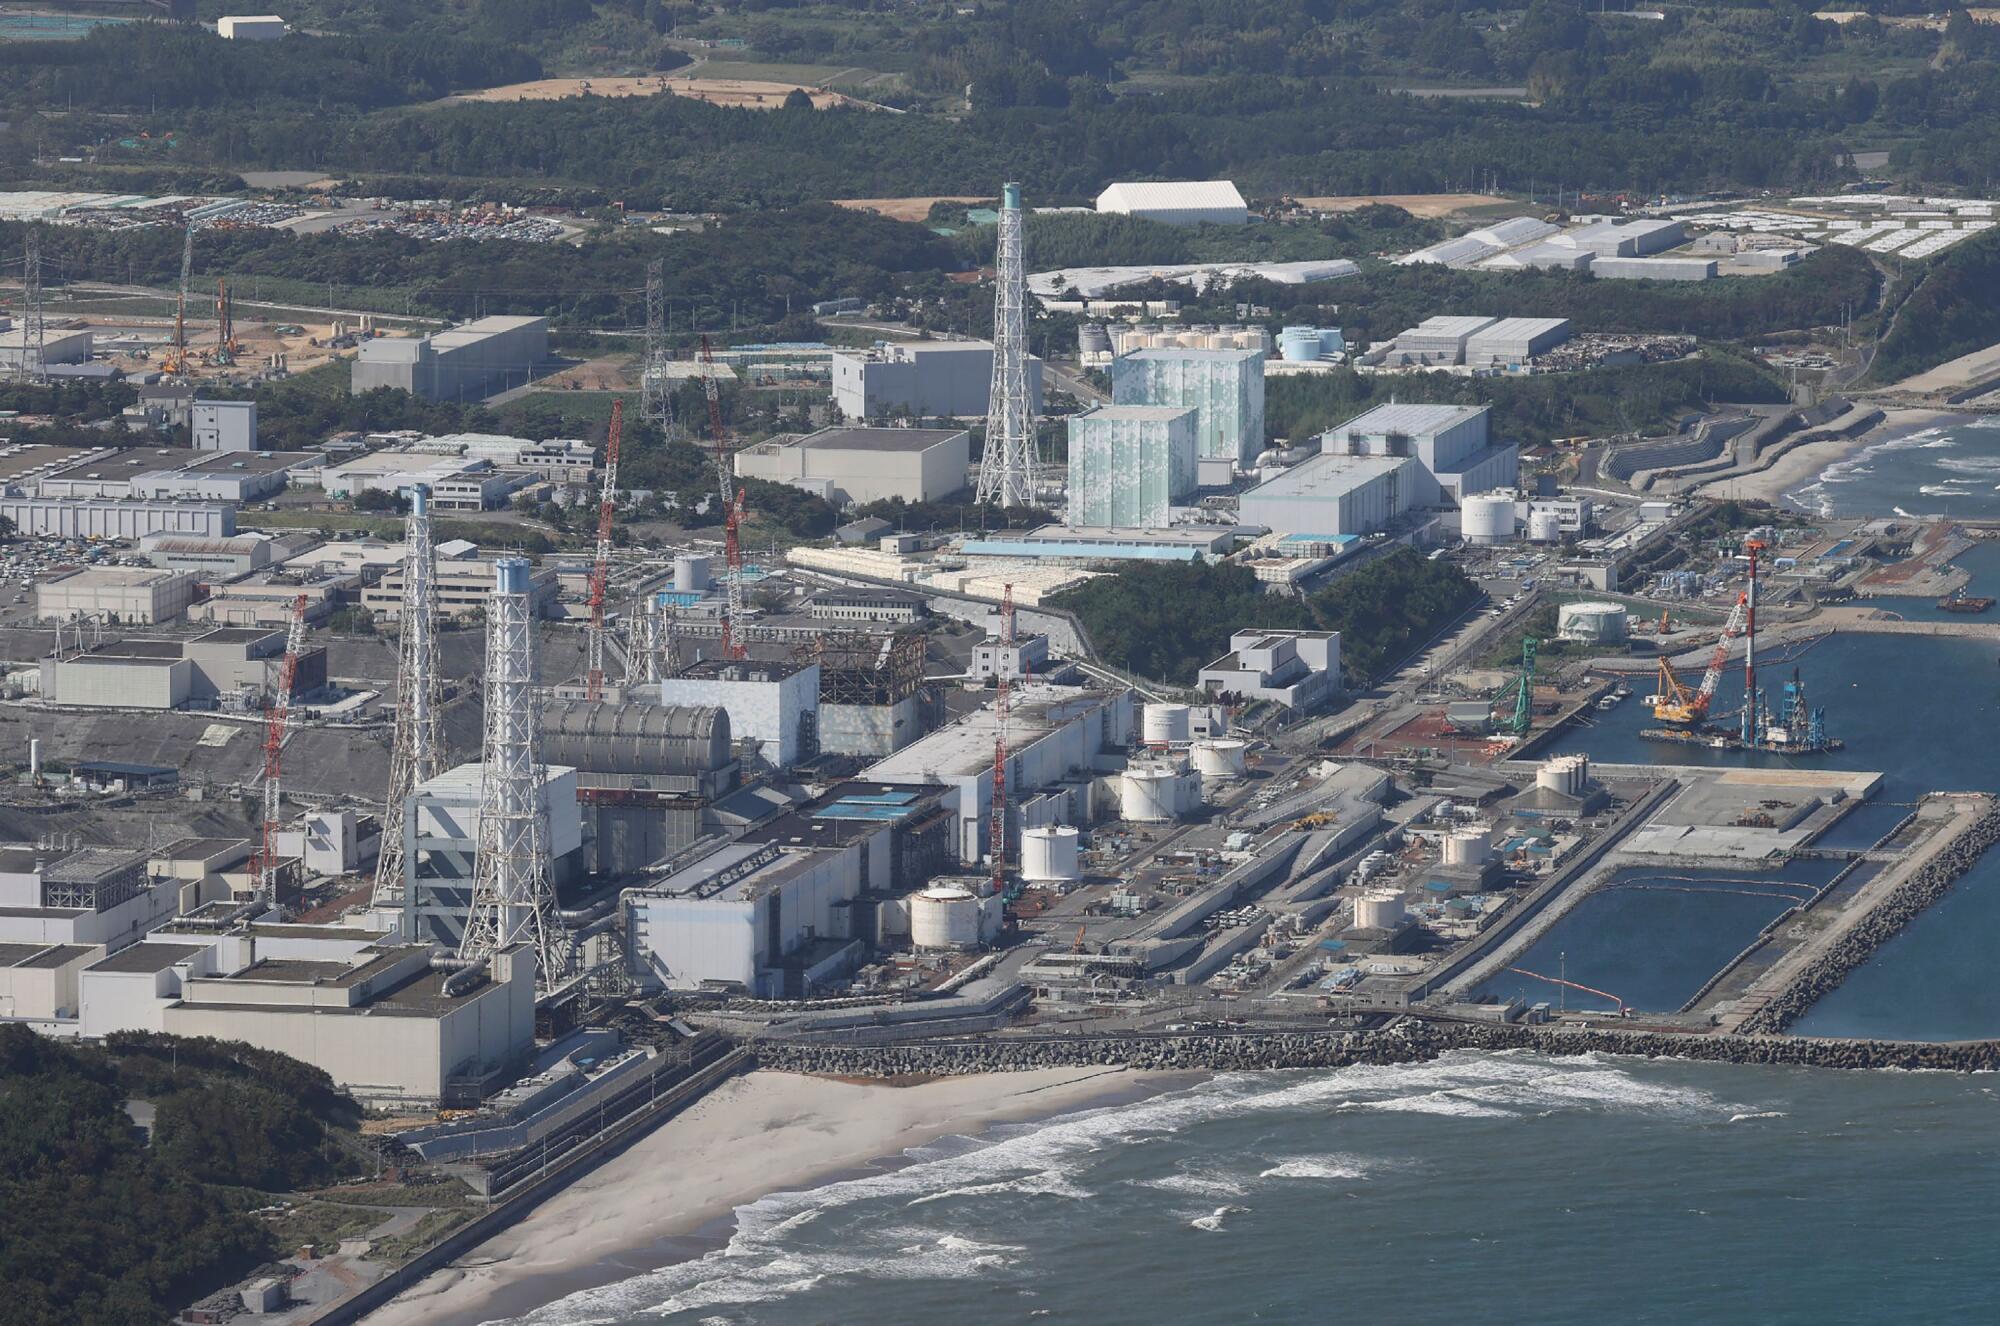 Aerial shot of tsunami-damaged Daiichi nuclear plant in Fukushima, Japan